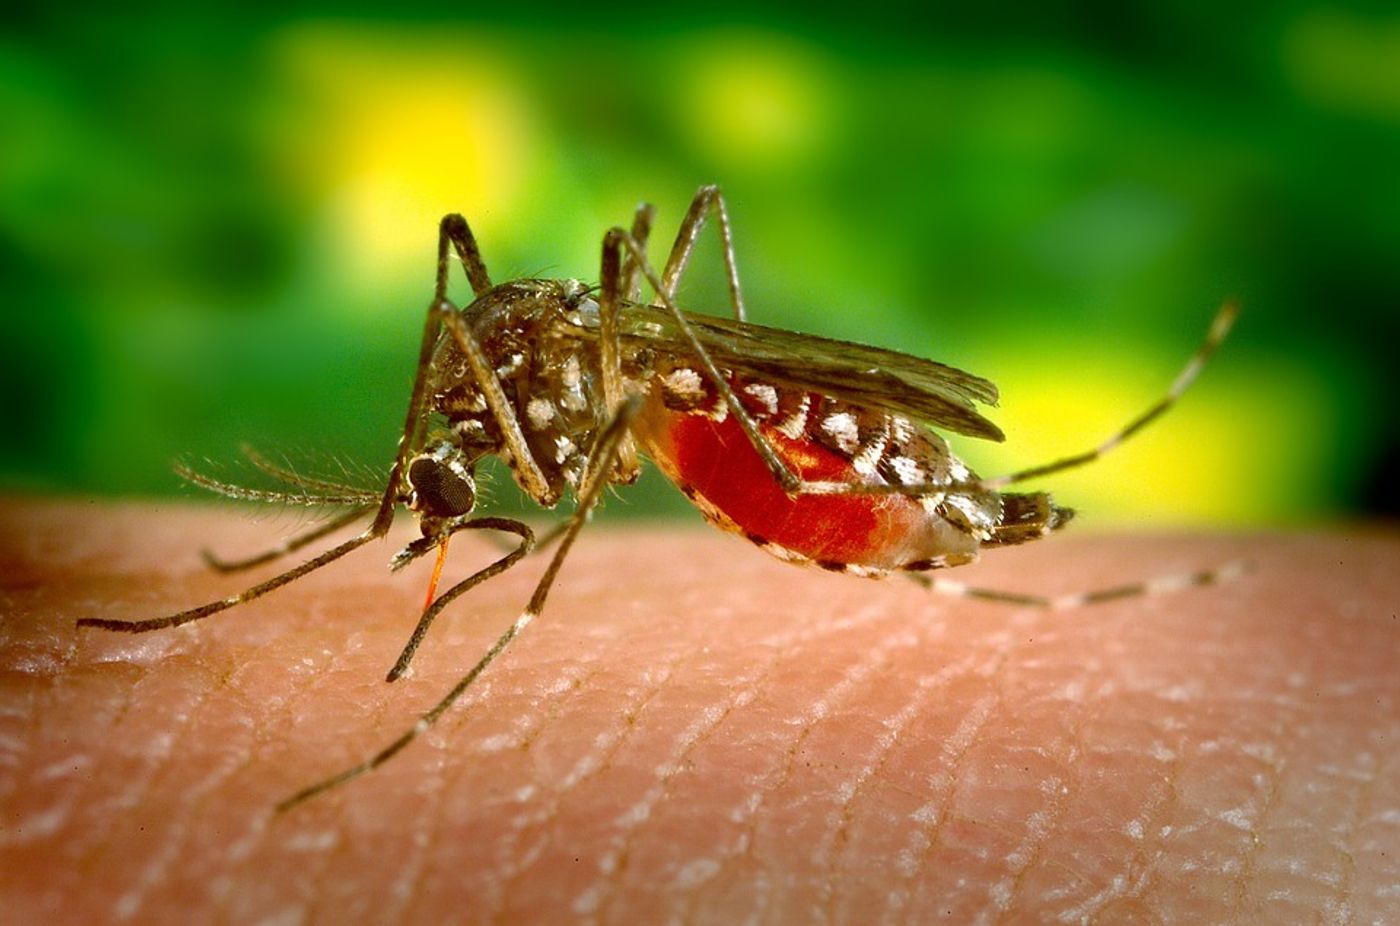 Mosquitoes carry diseases like dengue, Zika, and chikungunya. Photo: Pixabay